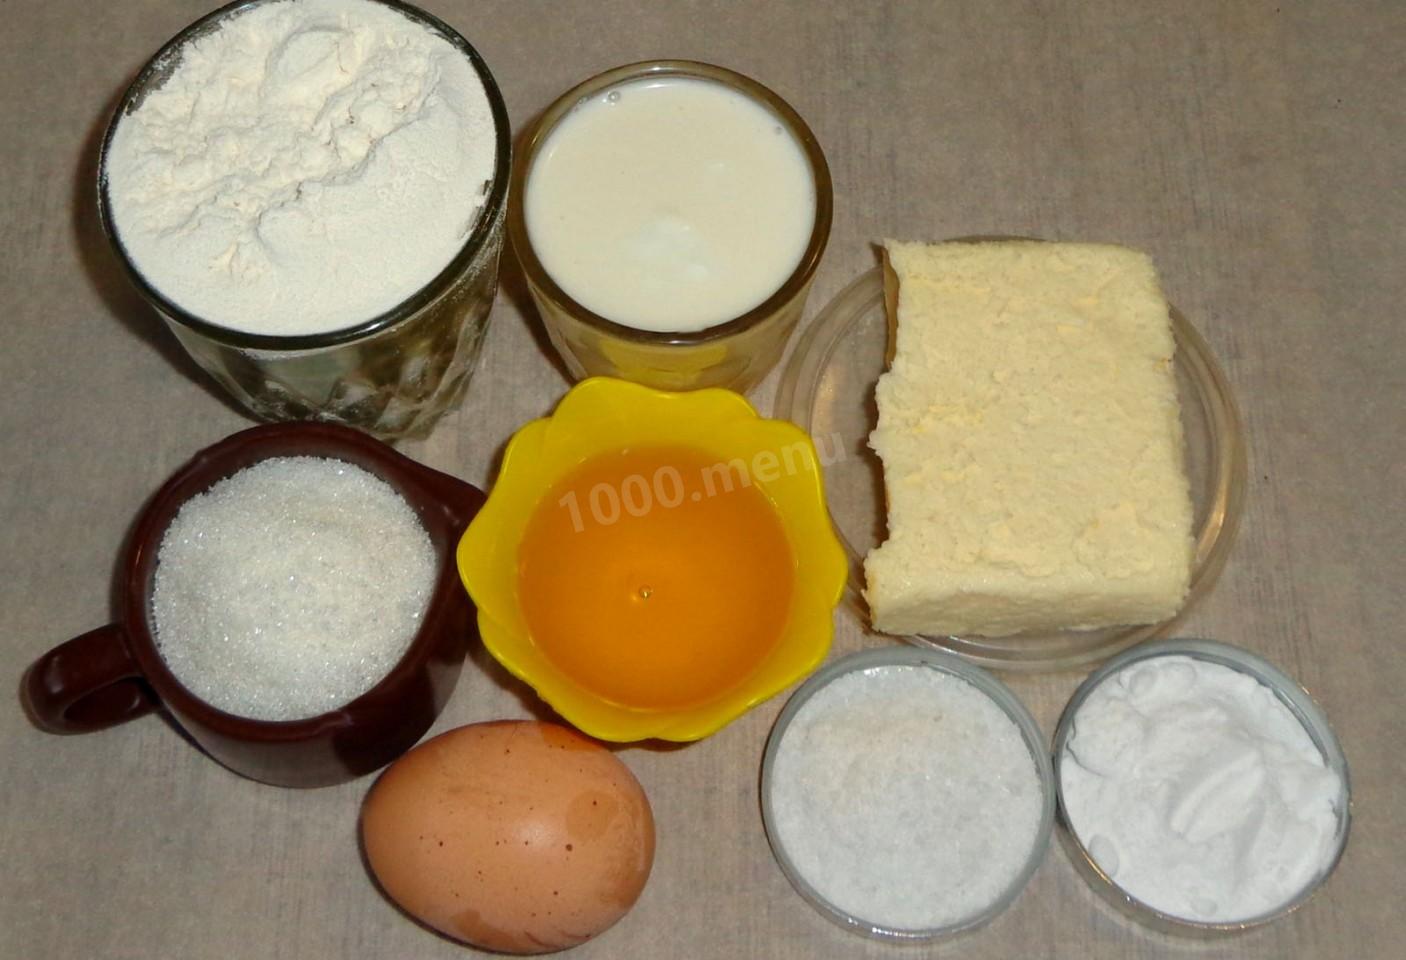 Кефир 1 яйцо мука сахар. Кефирное масло. Кифир силвичная масла яыца пичени риолик. Пышечки на кефире с содой.